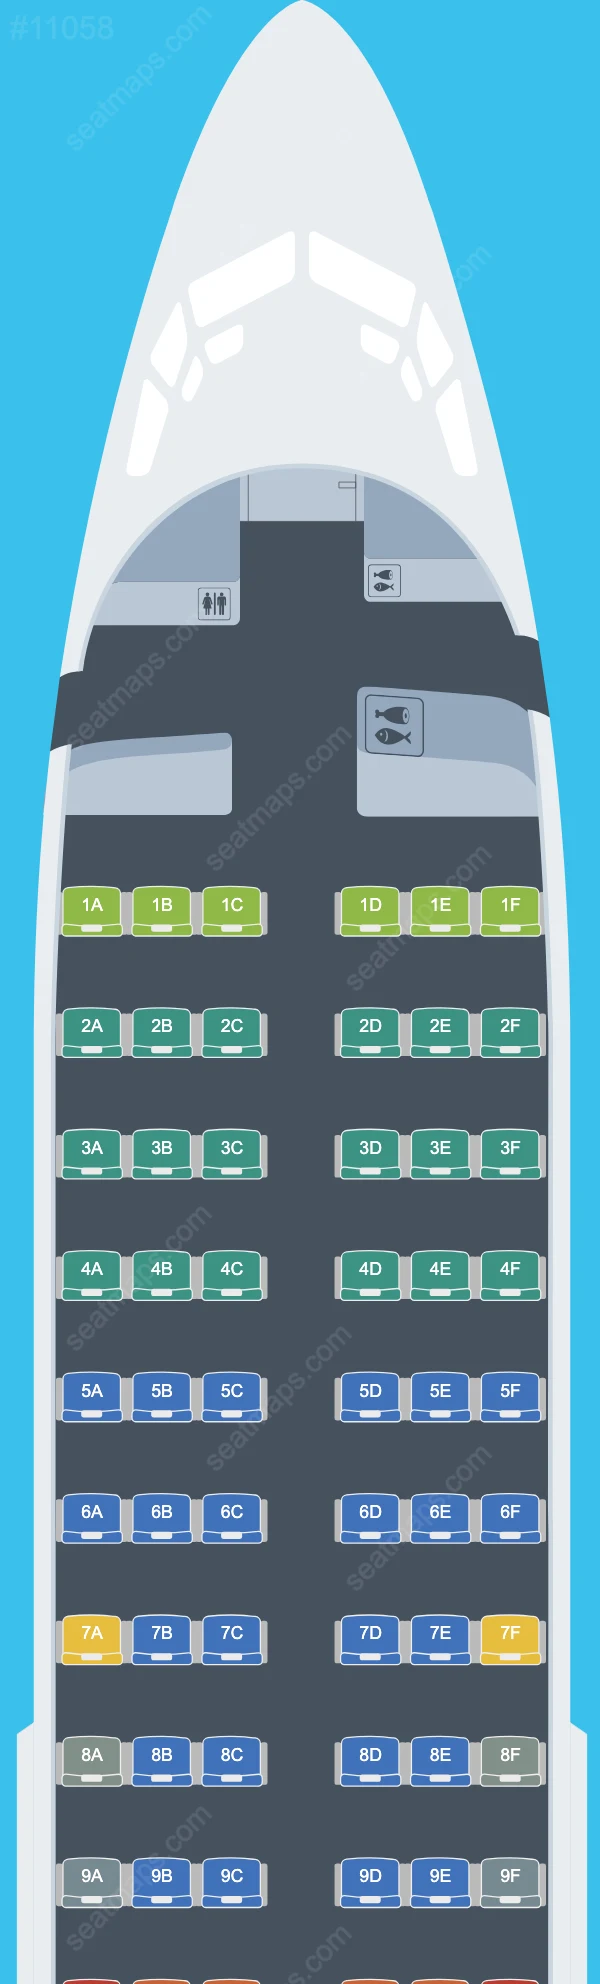 Virgin Australia Boeing 737 Seat Maps 737-700